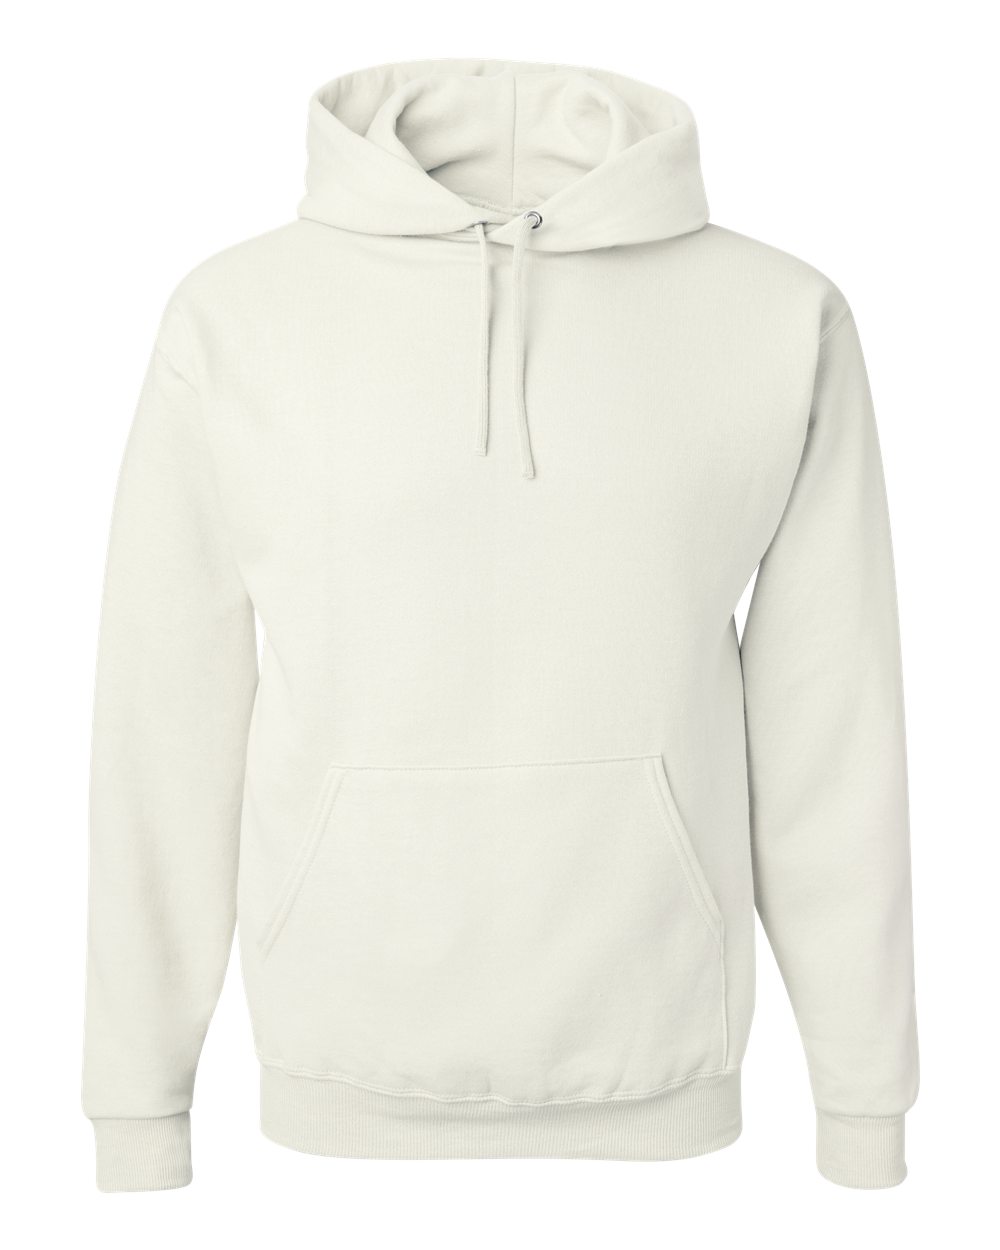 JERZEES Men NuBlend Hooded Sweatshirt 996MRb up to 5XL | eBay